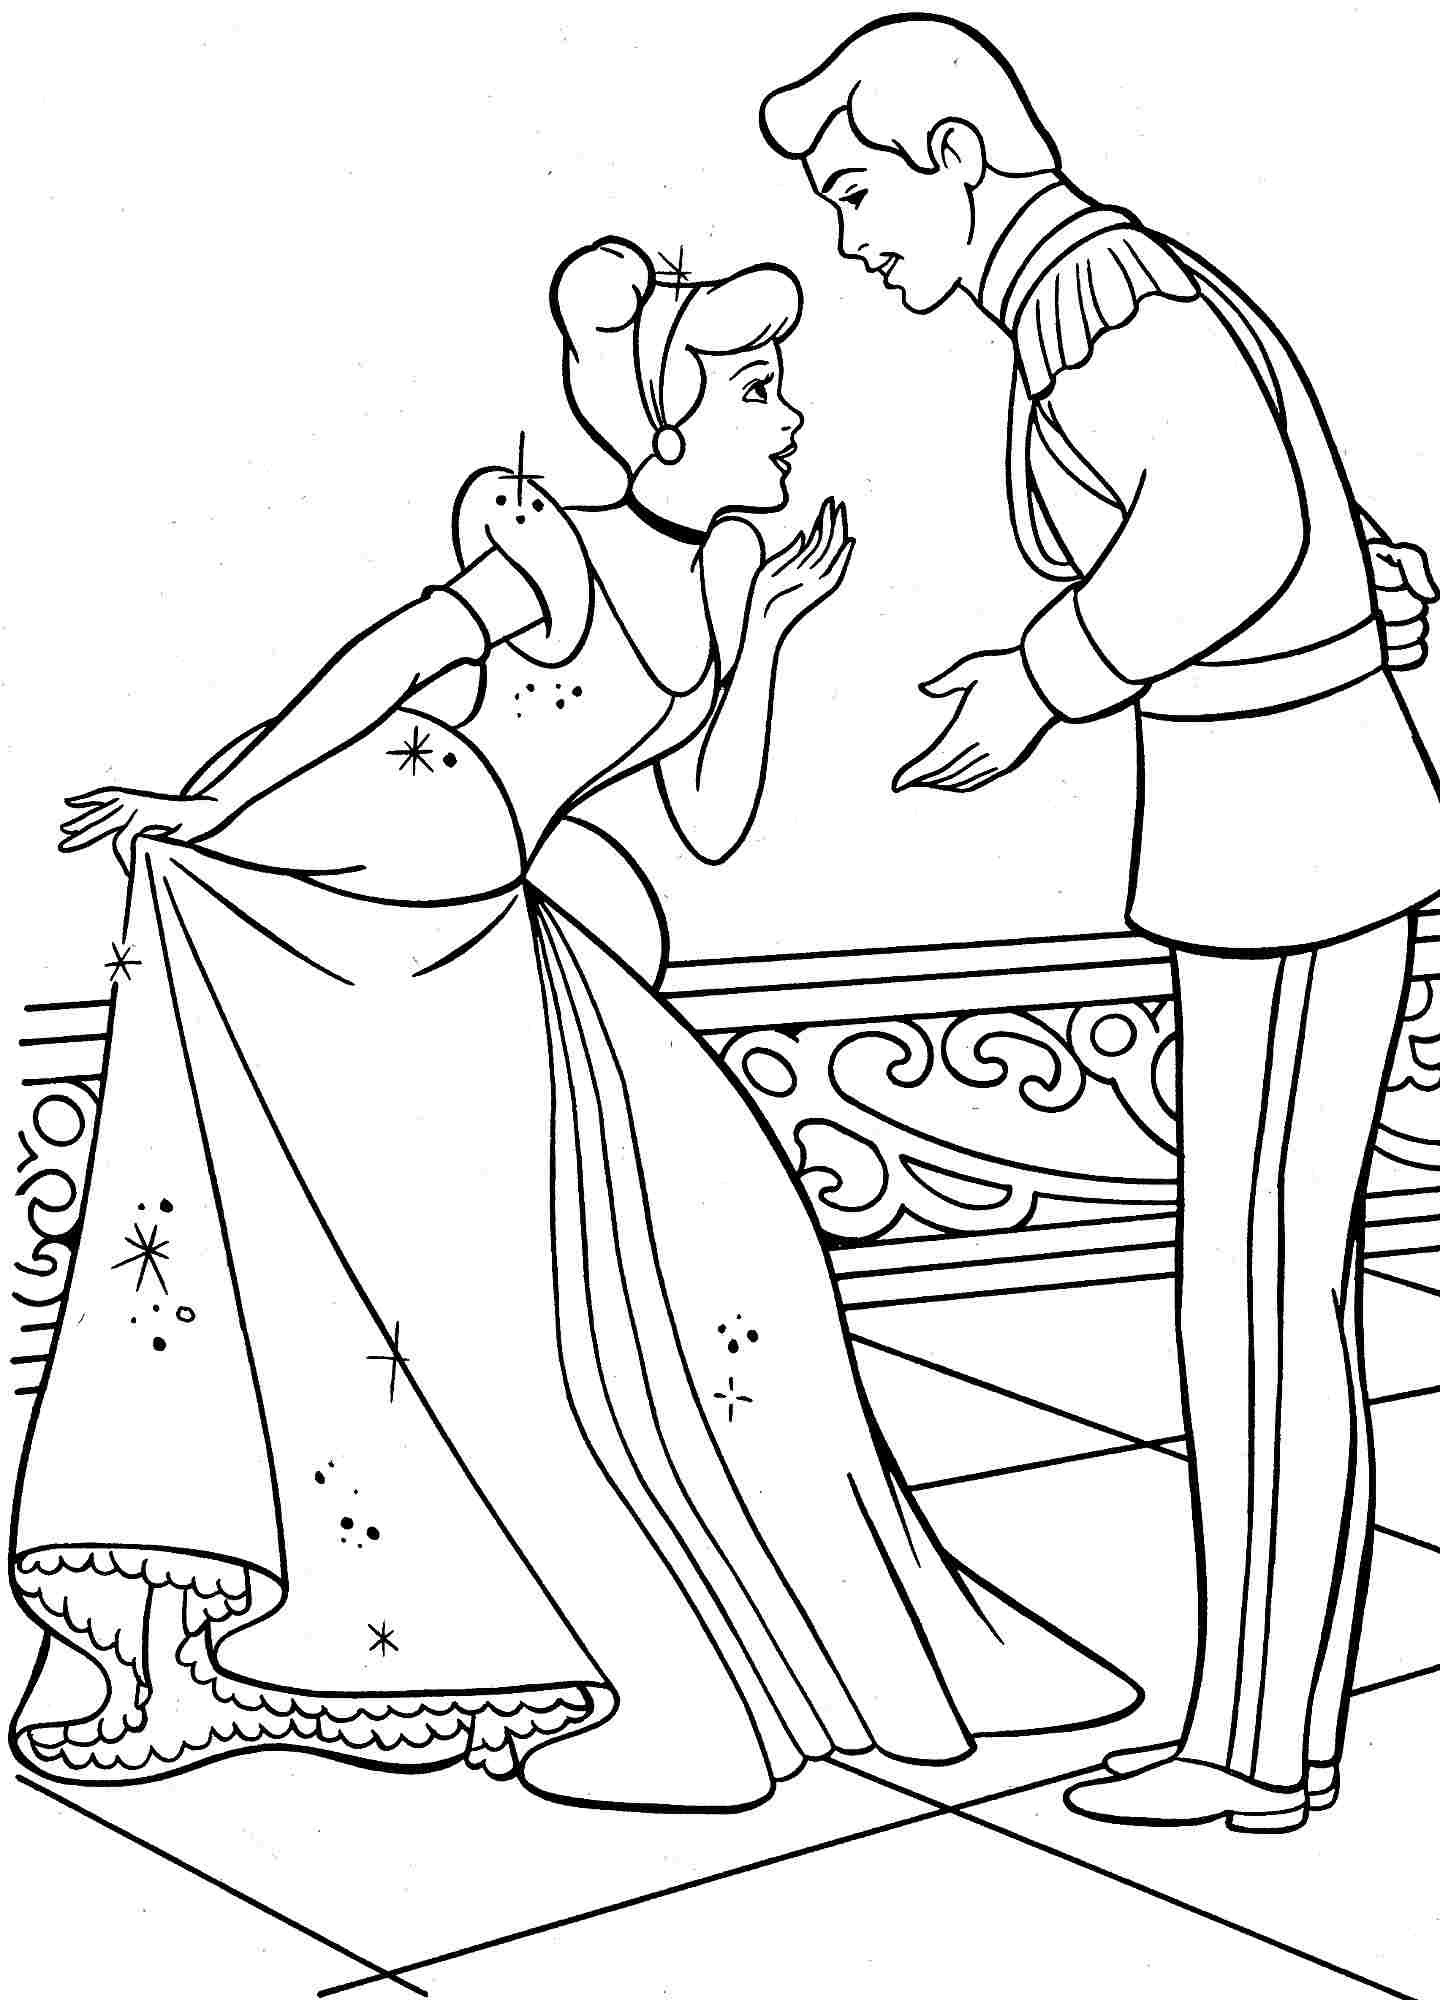 Disney Princess Cinderella Coloring Pages Games - BubaKids.com